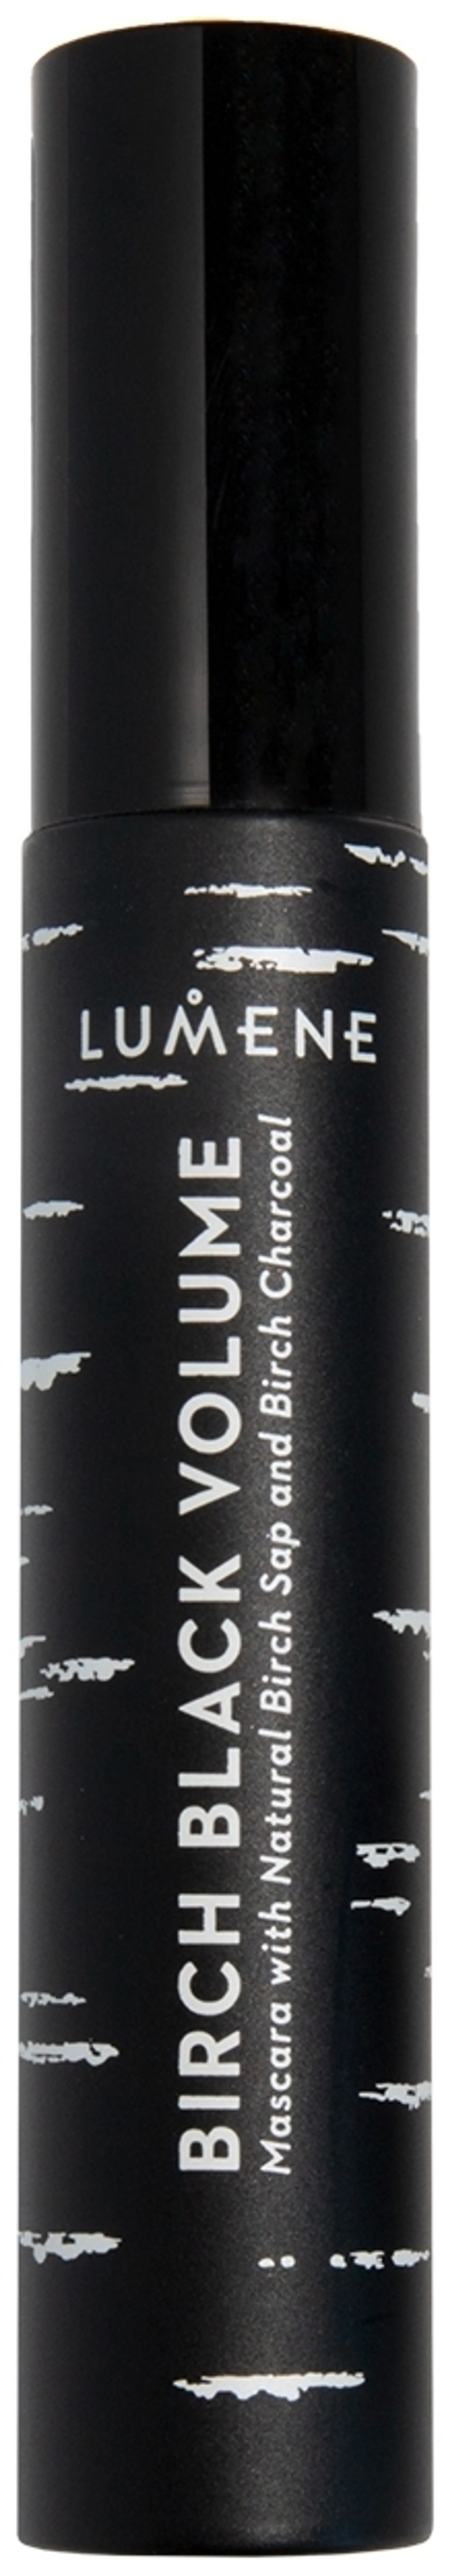 Lumene Birch Black Volume Mascara Black 14ml - 2